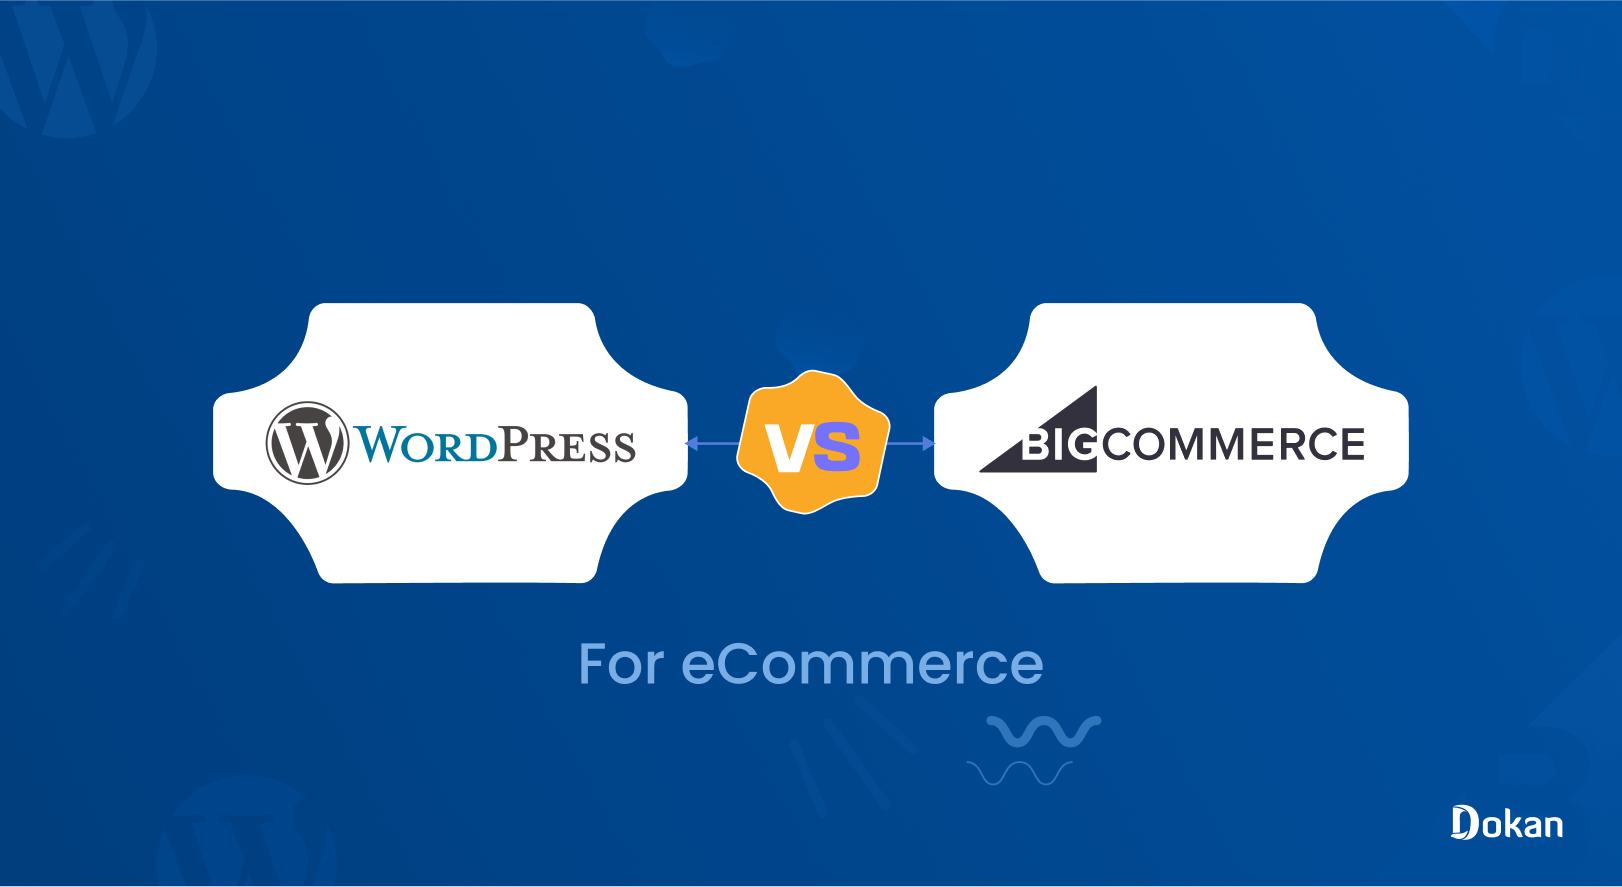 WordPress vs BigCommerce for ecommerce